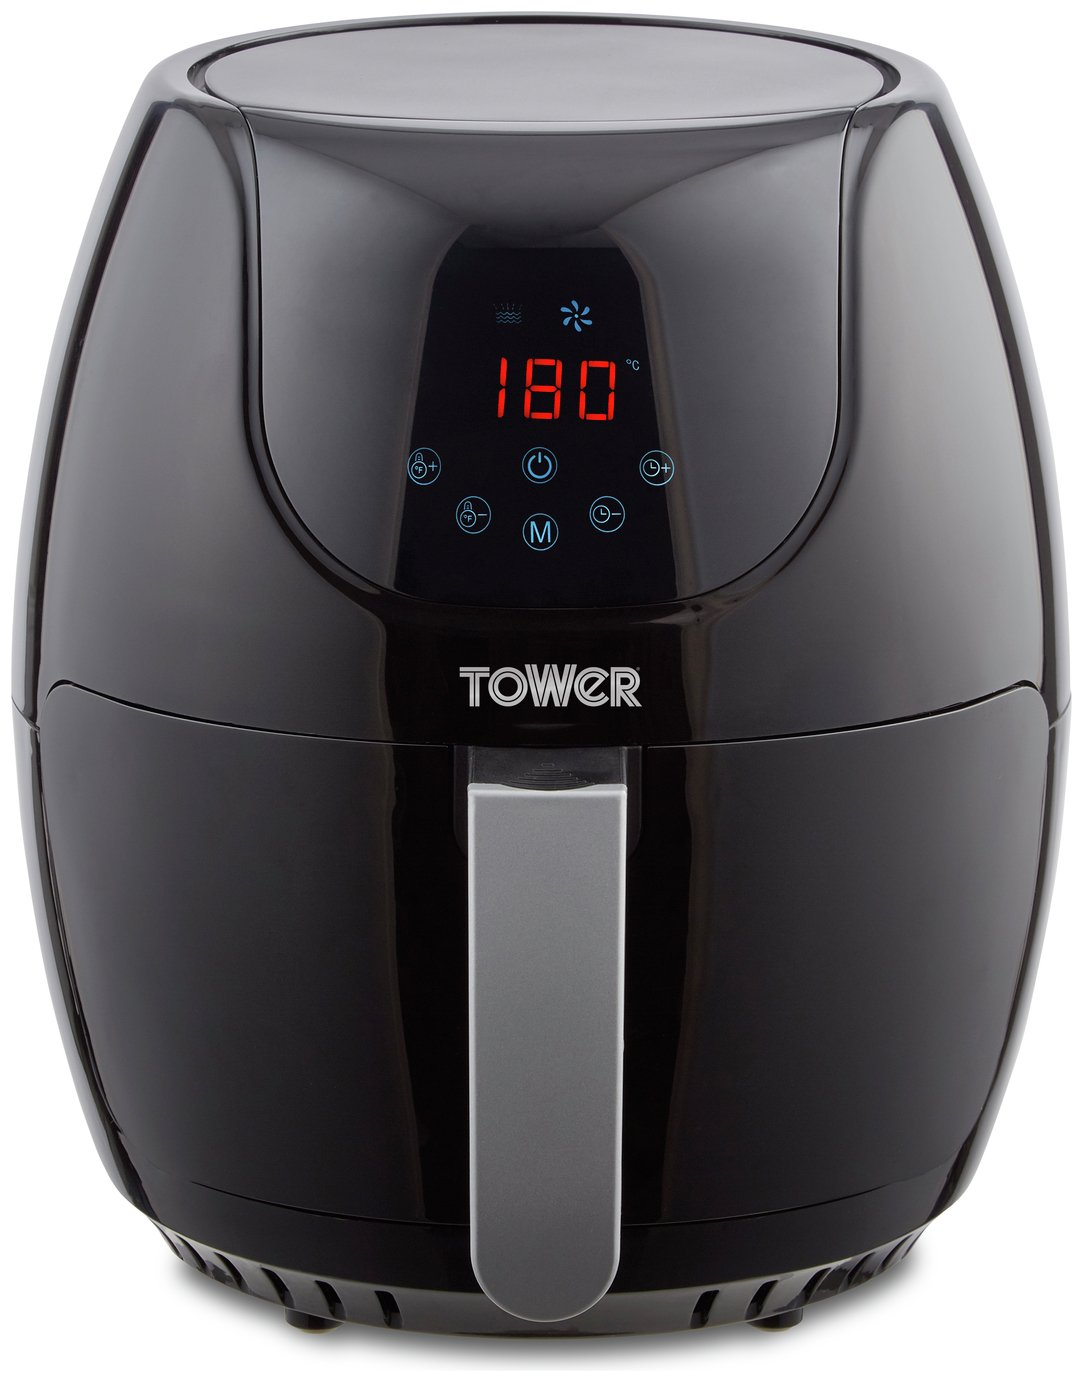 Tower T17067 4L Digital Air Fryer - Black